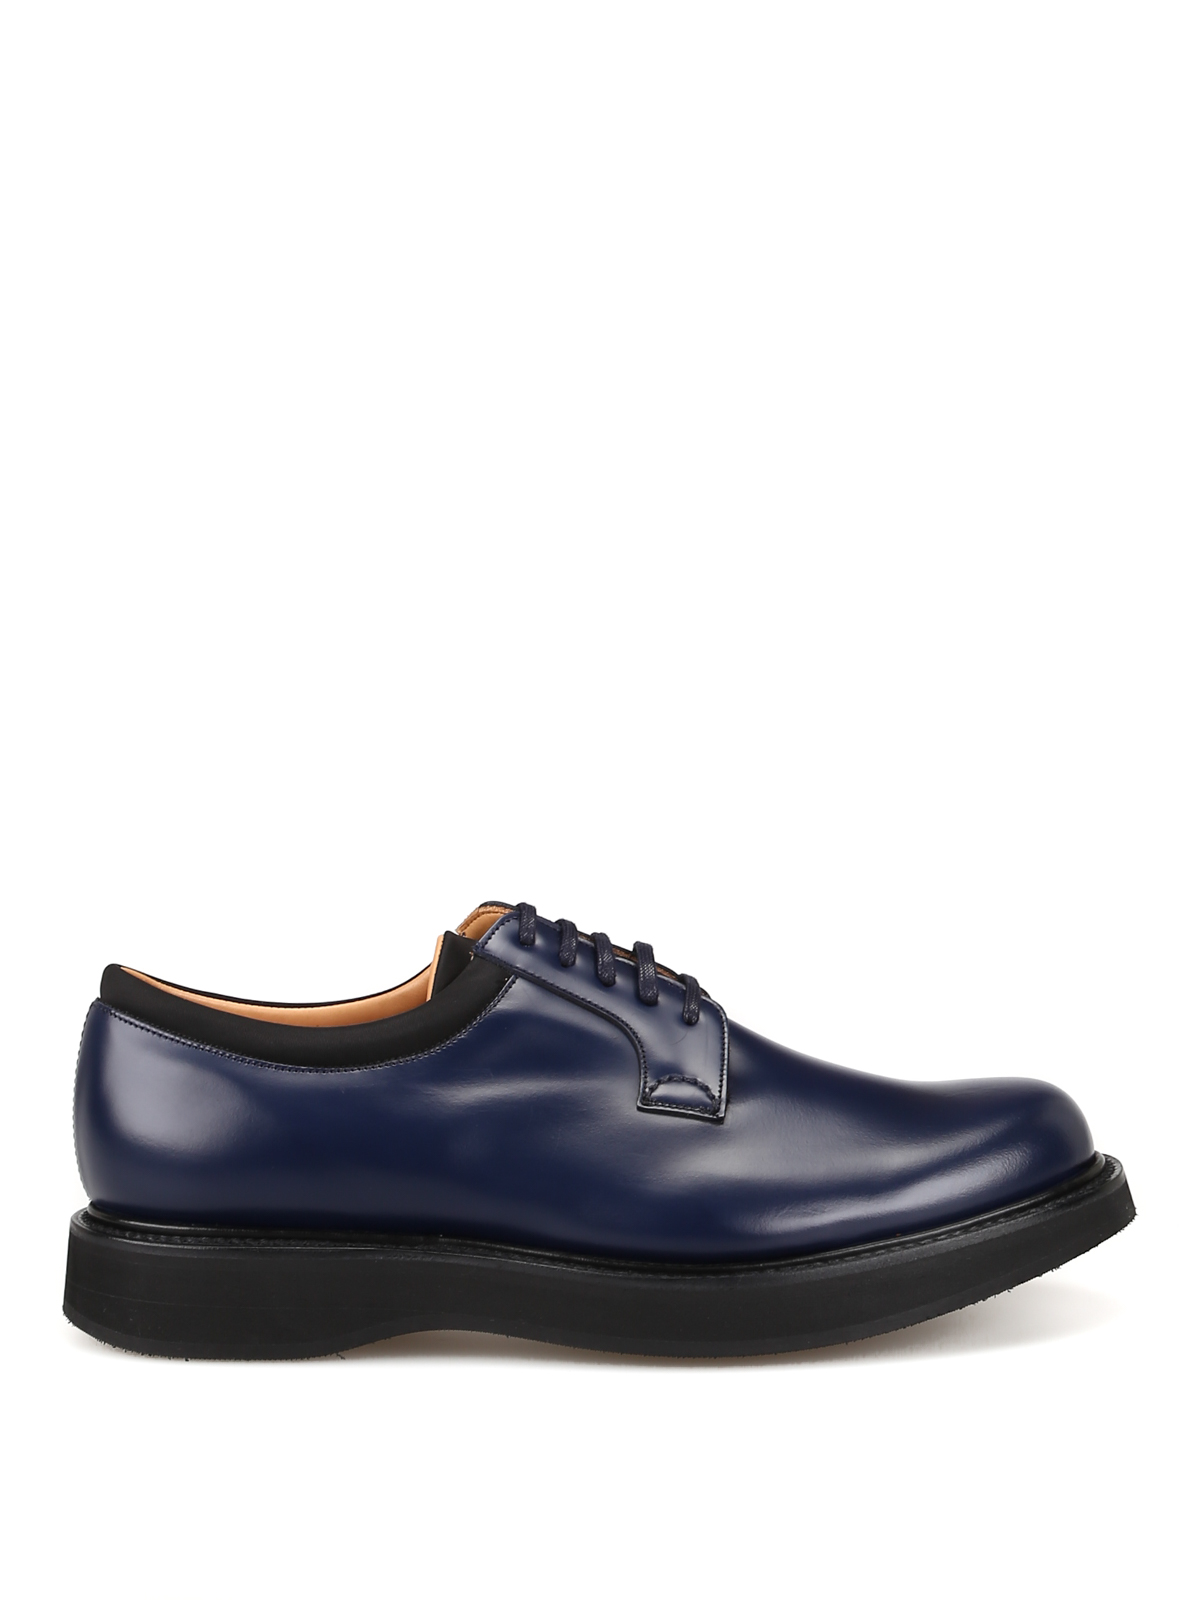 Church's - Brandon baltic blue leather Derby shoes - lace-ups shoes ...